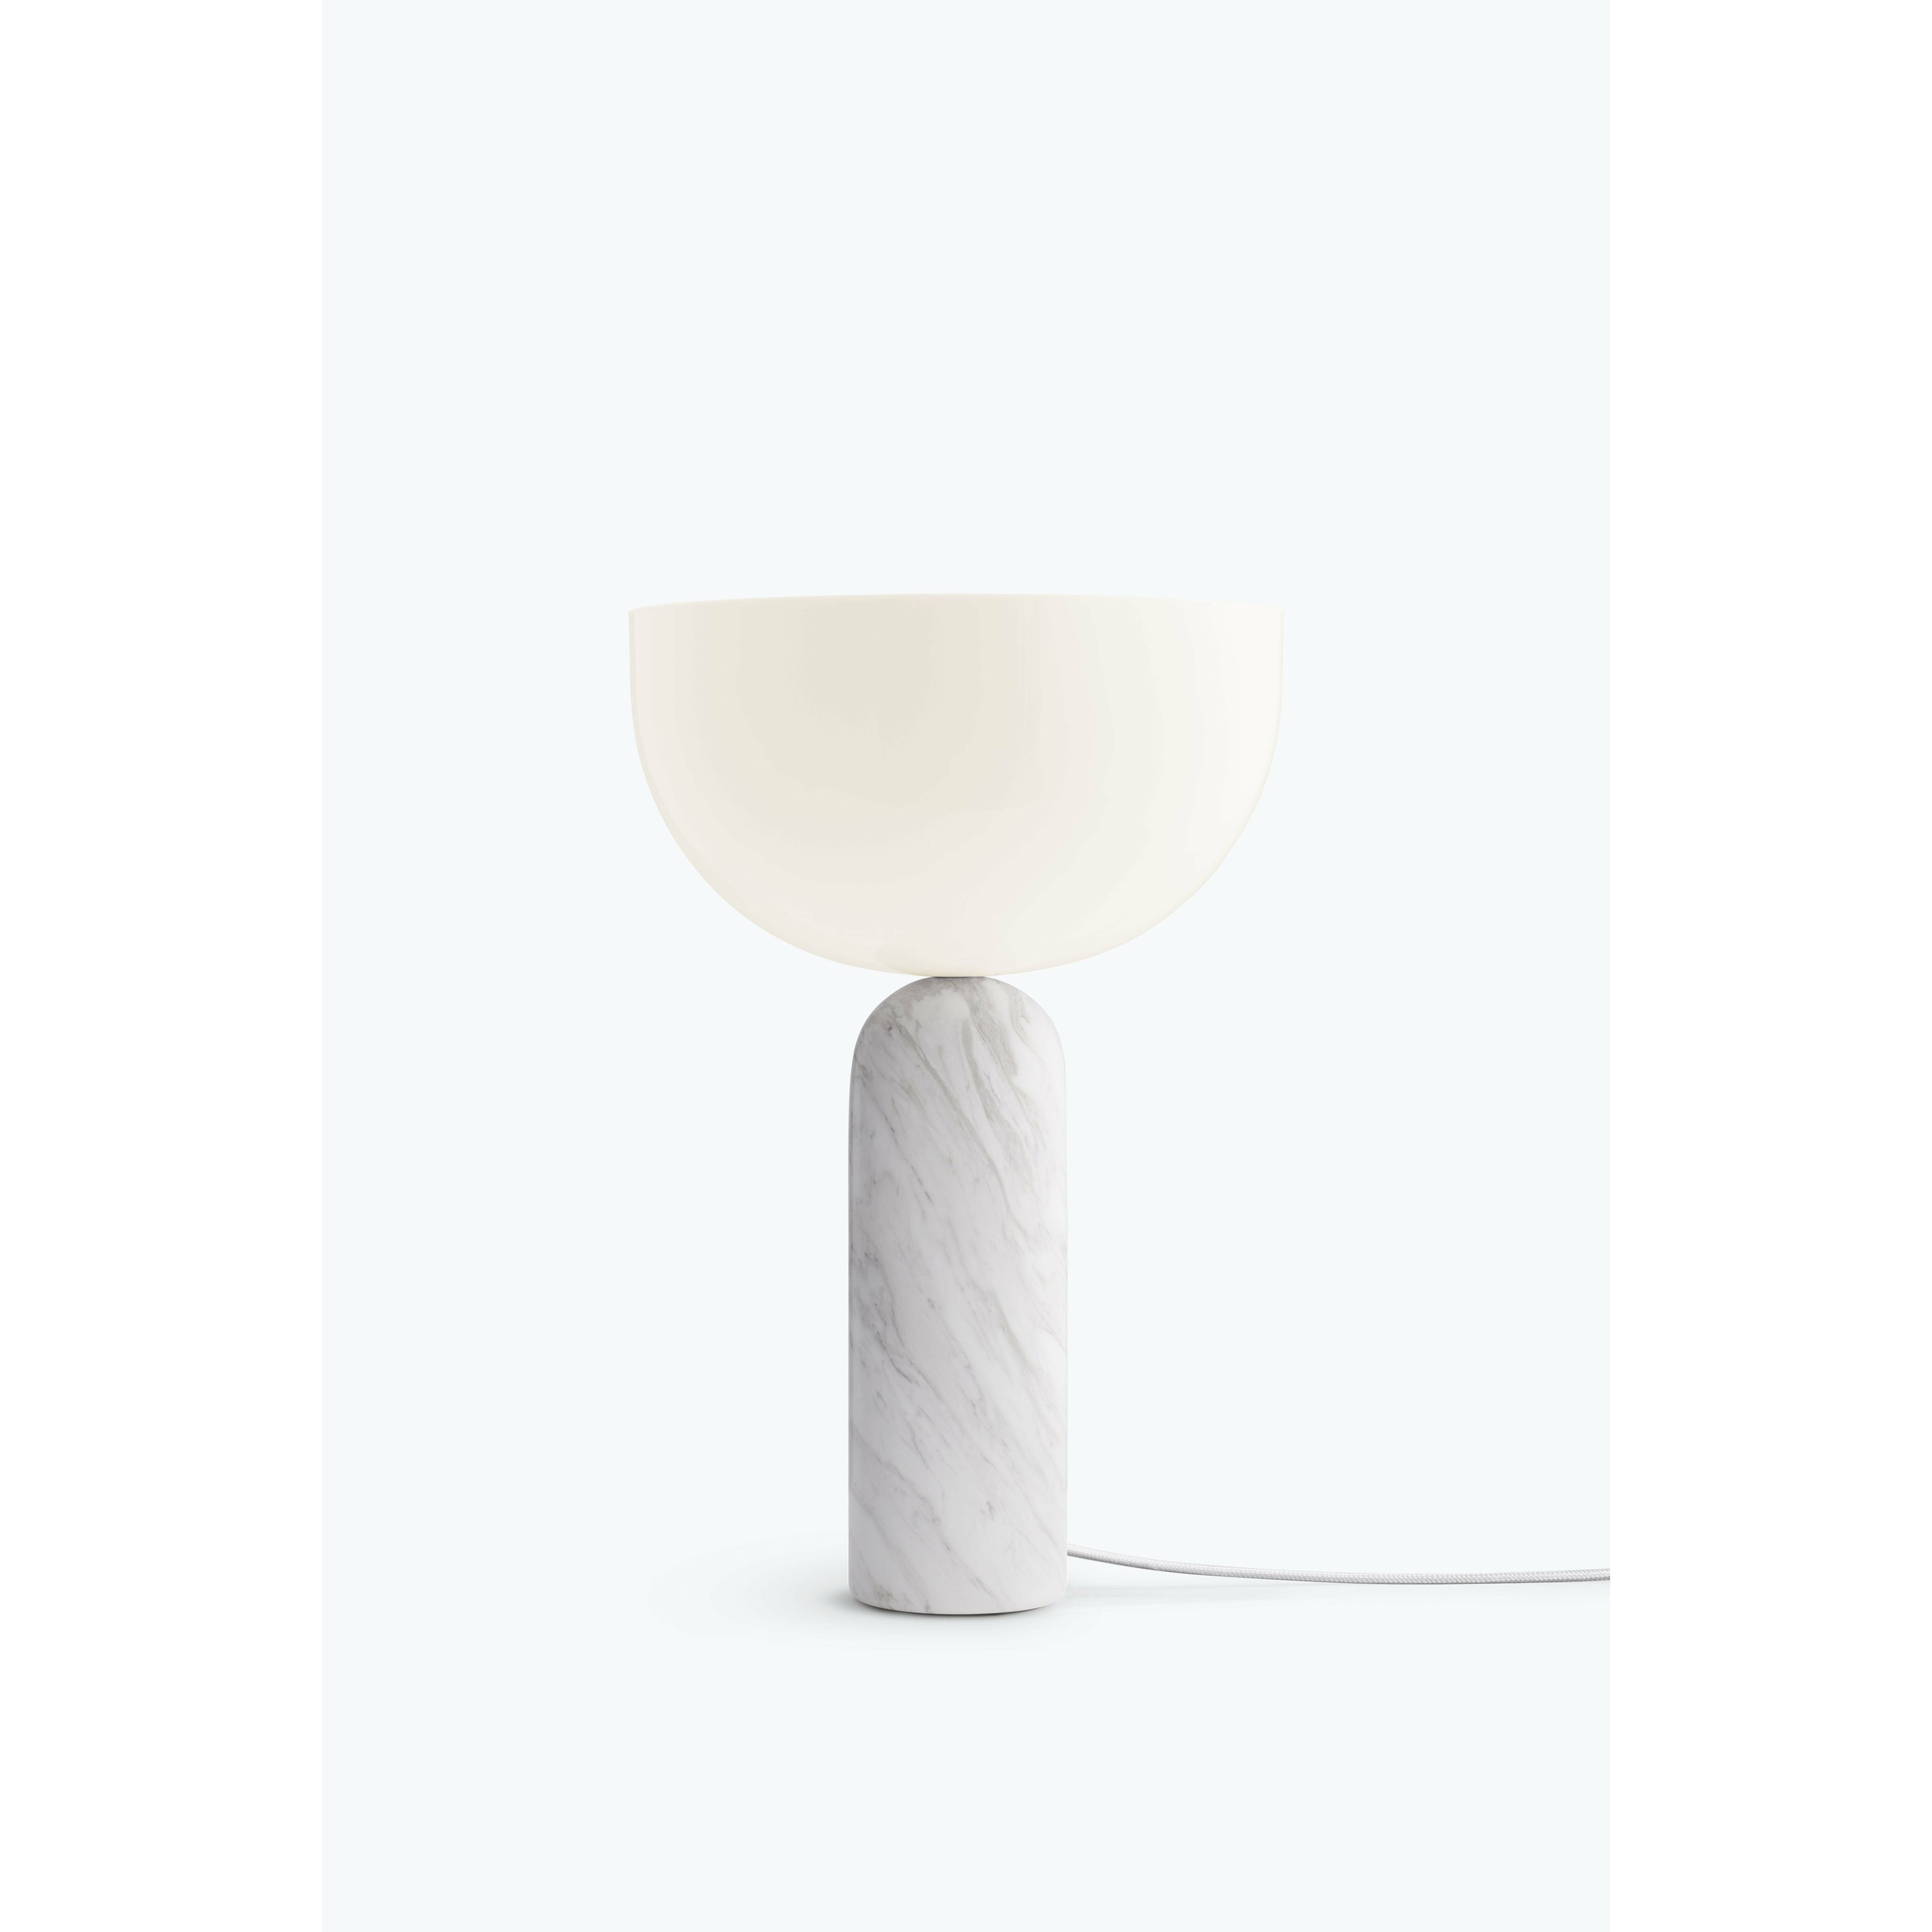 New Works Kizu Table Lampe blanc Carrara marbre, grand